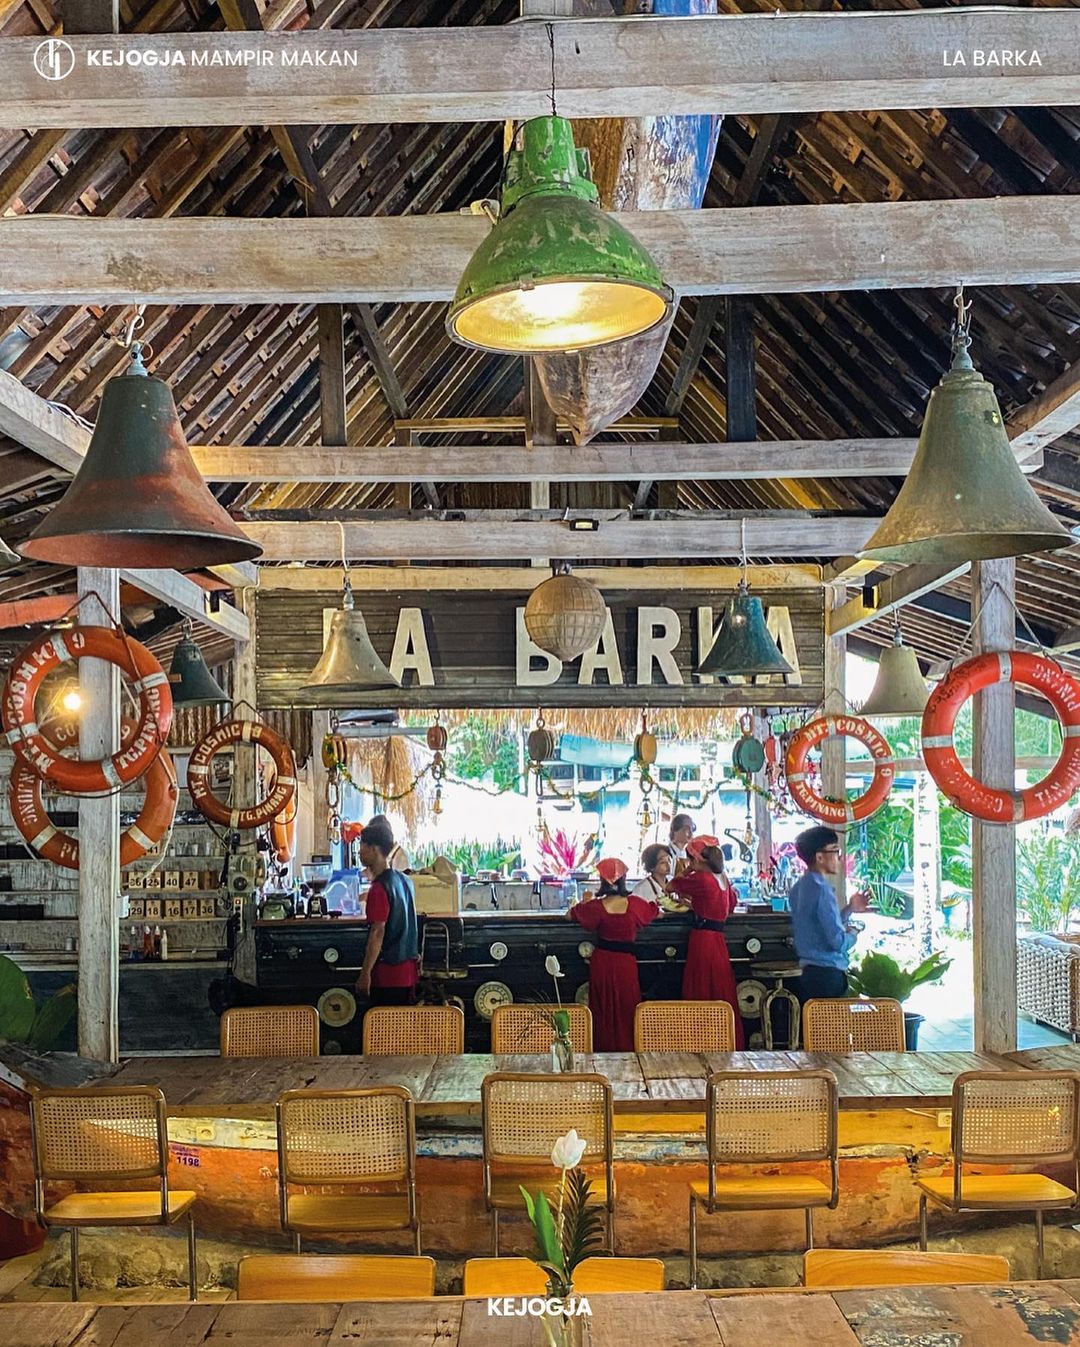 Jam Buka La Barka Bar Resto Image From @ke Jogja_